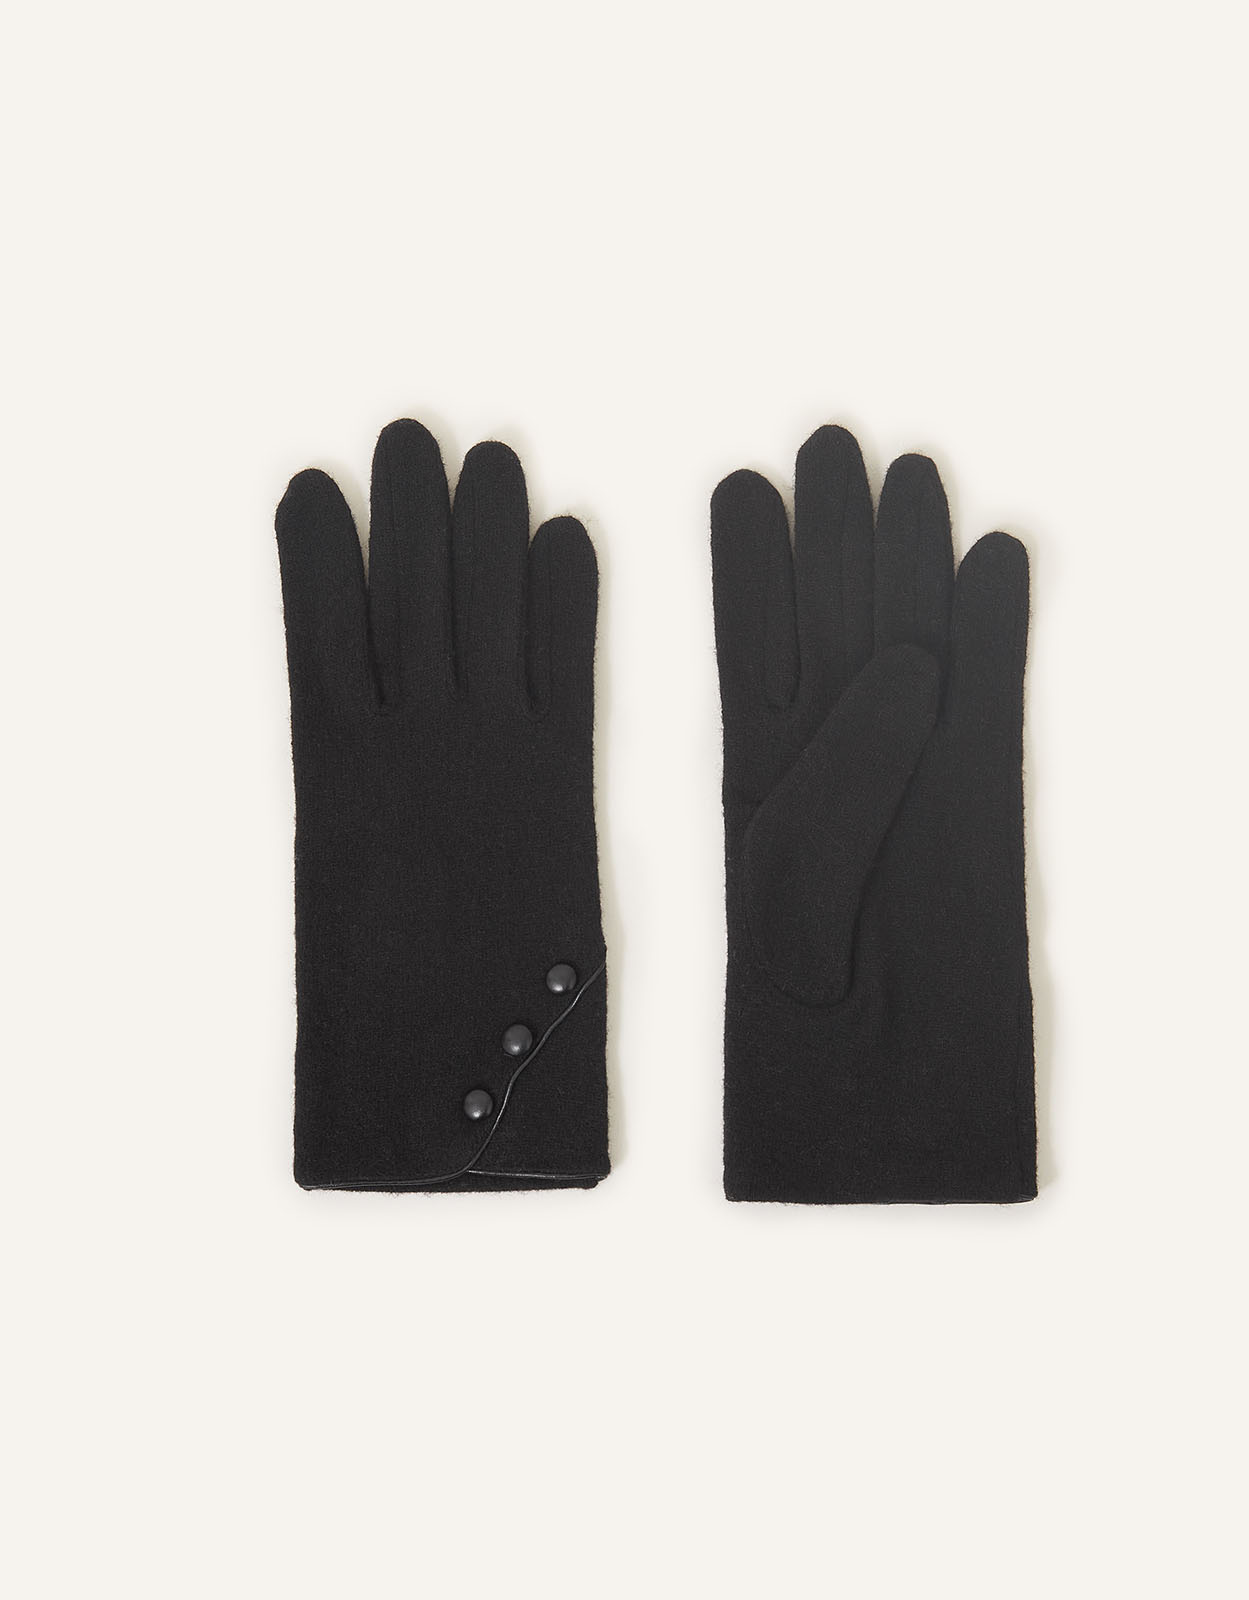 Accessorize Women's Button Gloves in Wool Blend Black, Size: S / M